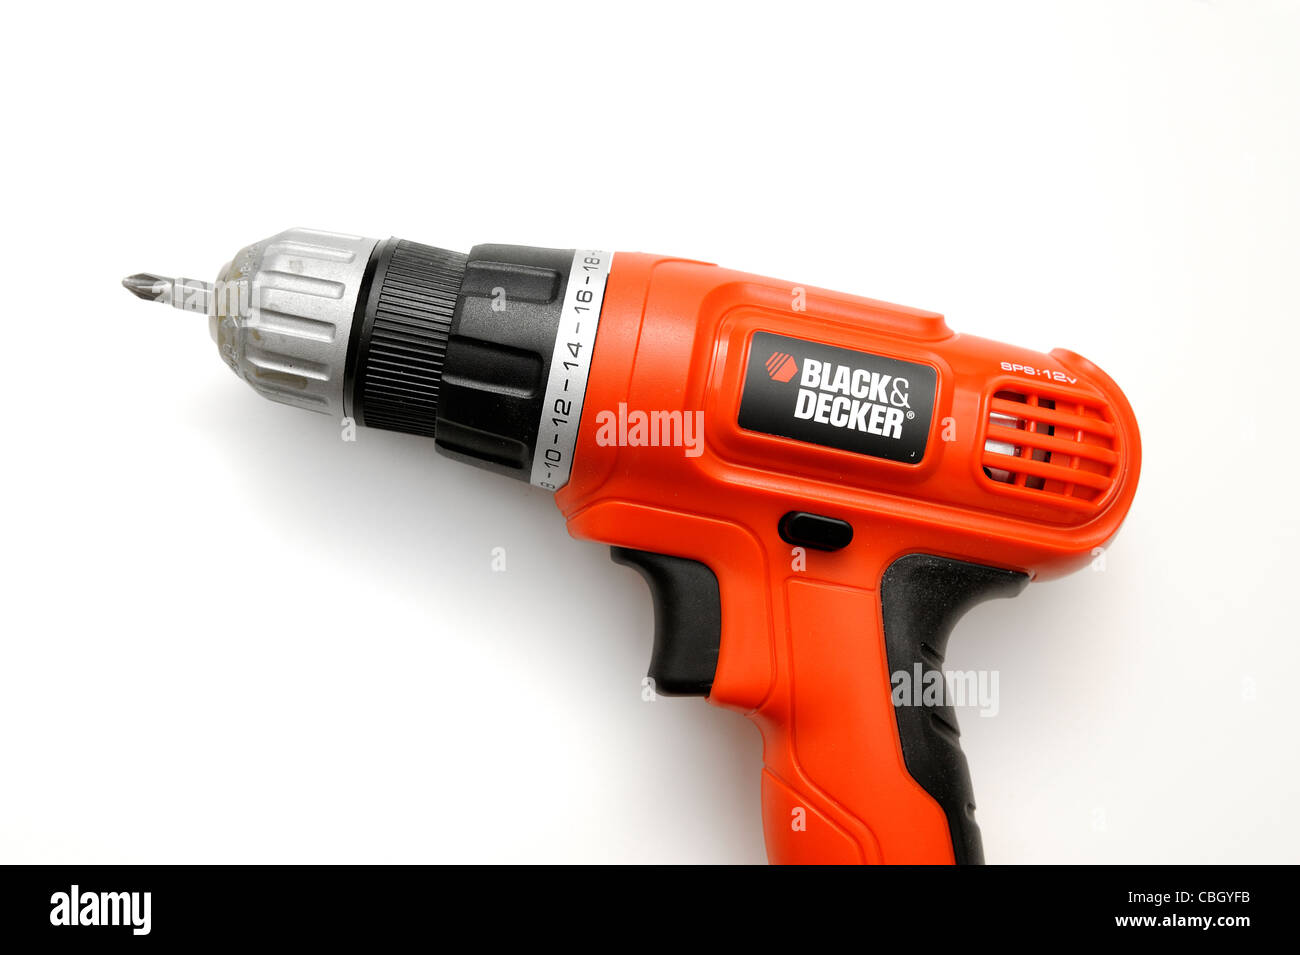 https://c8.alamy.com/comp/CBGYFB/black-and-decker-cordless-power-drill-and-screwdriver-CBGYFB.jpg